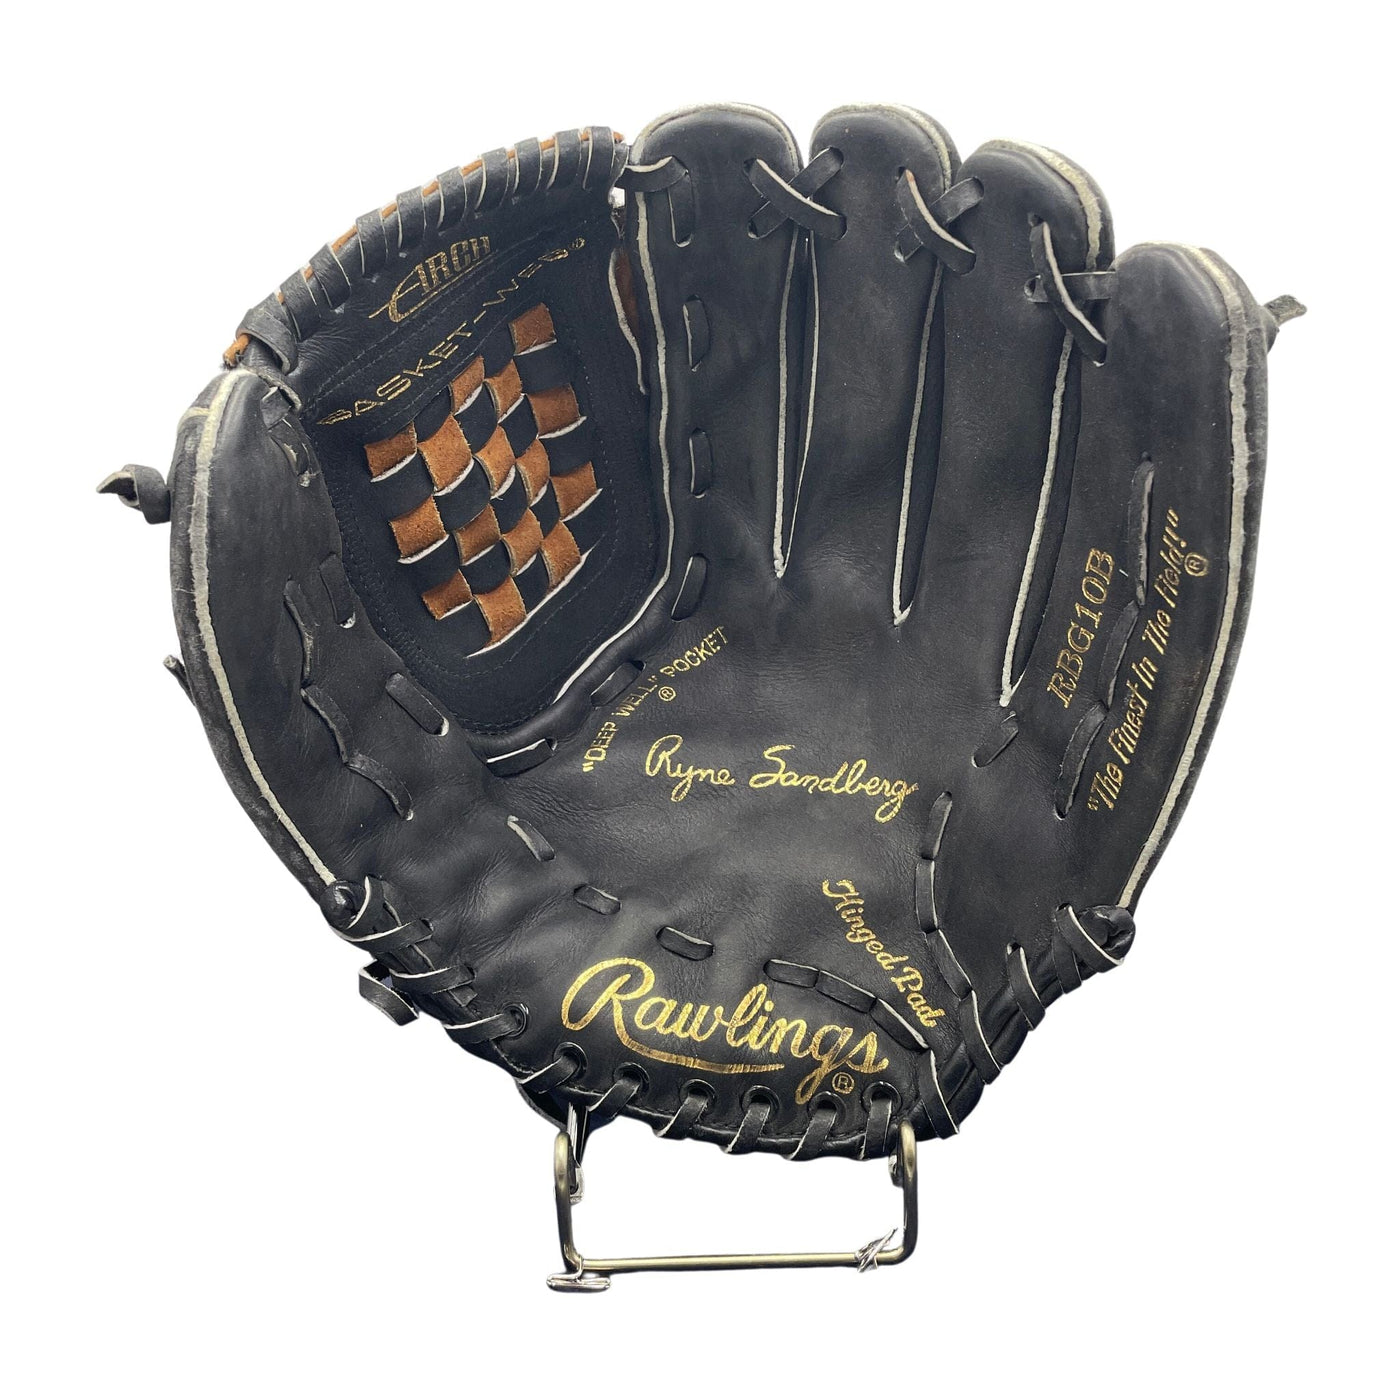 Ryne Sandberg Baseball Glove - G016